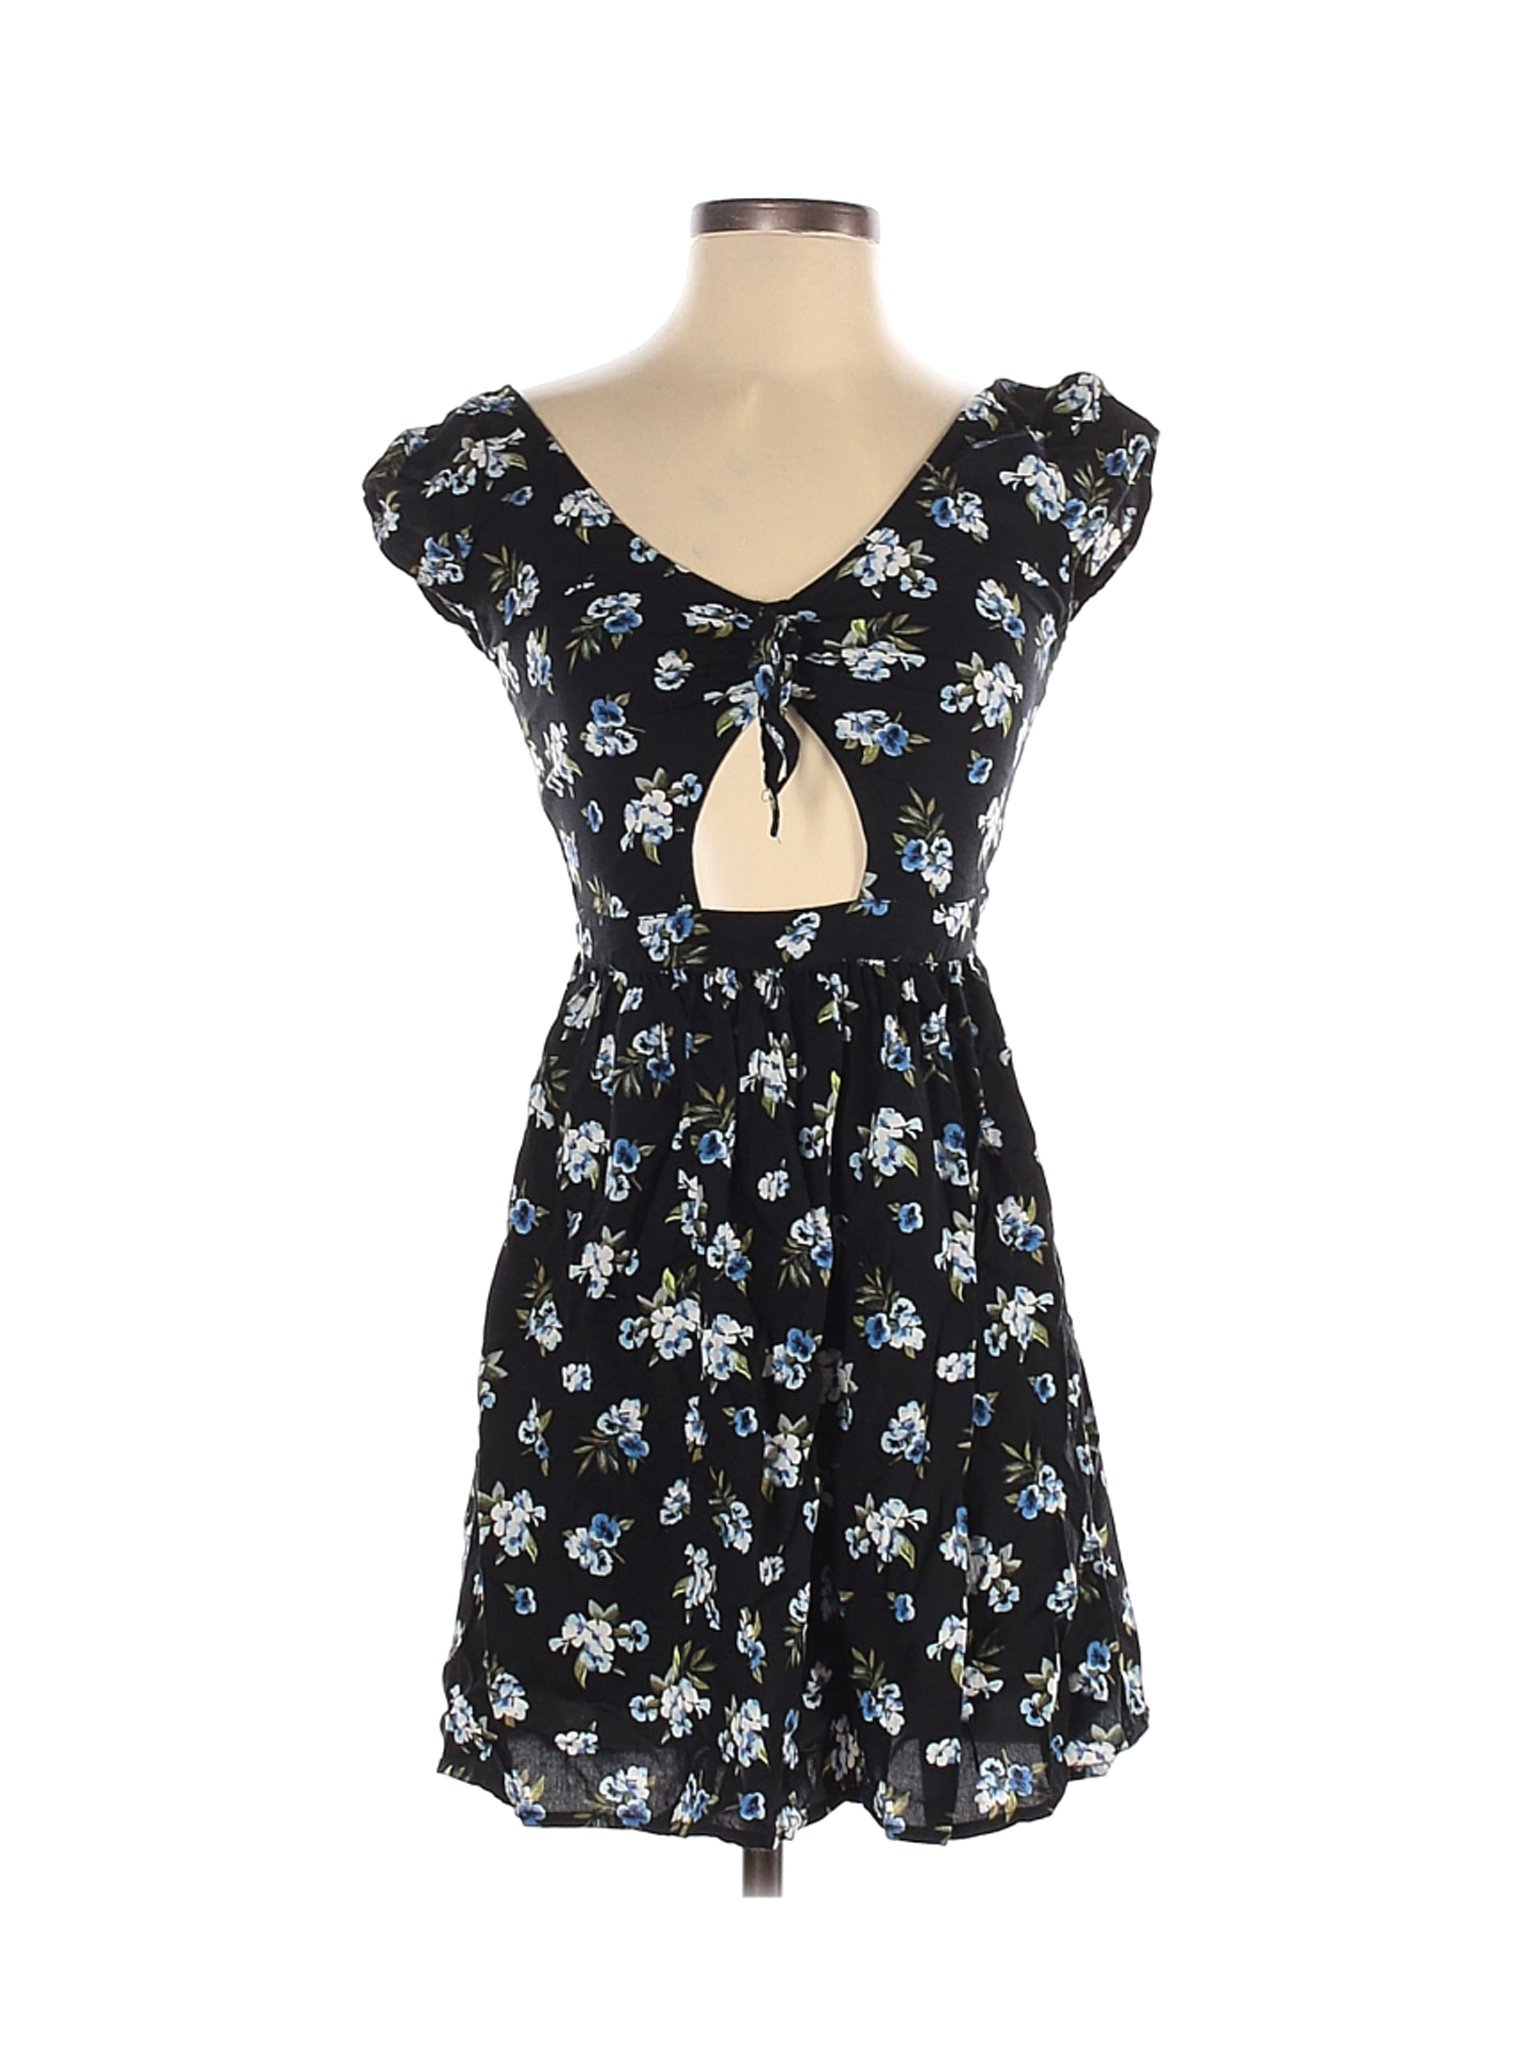 Hollister Women Black Casual Dress S | eBay